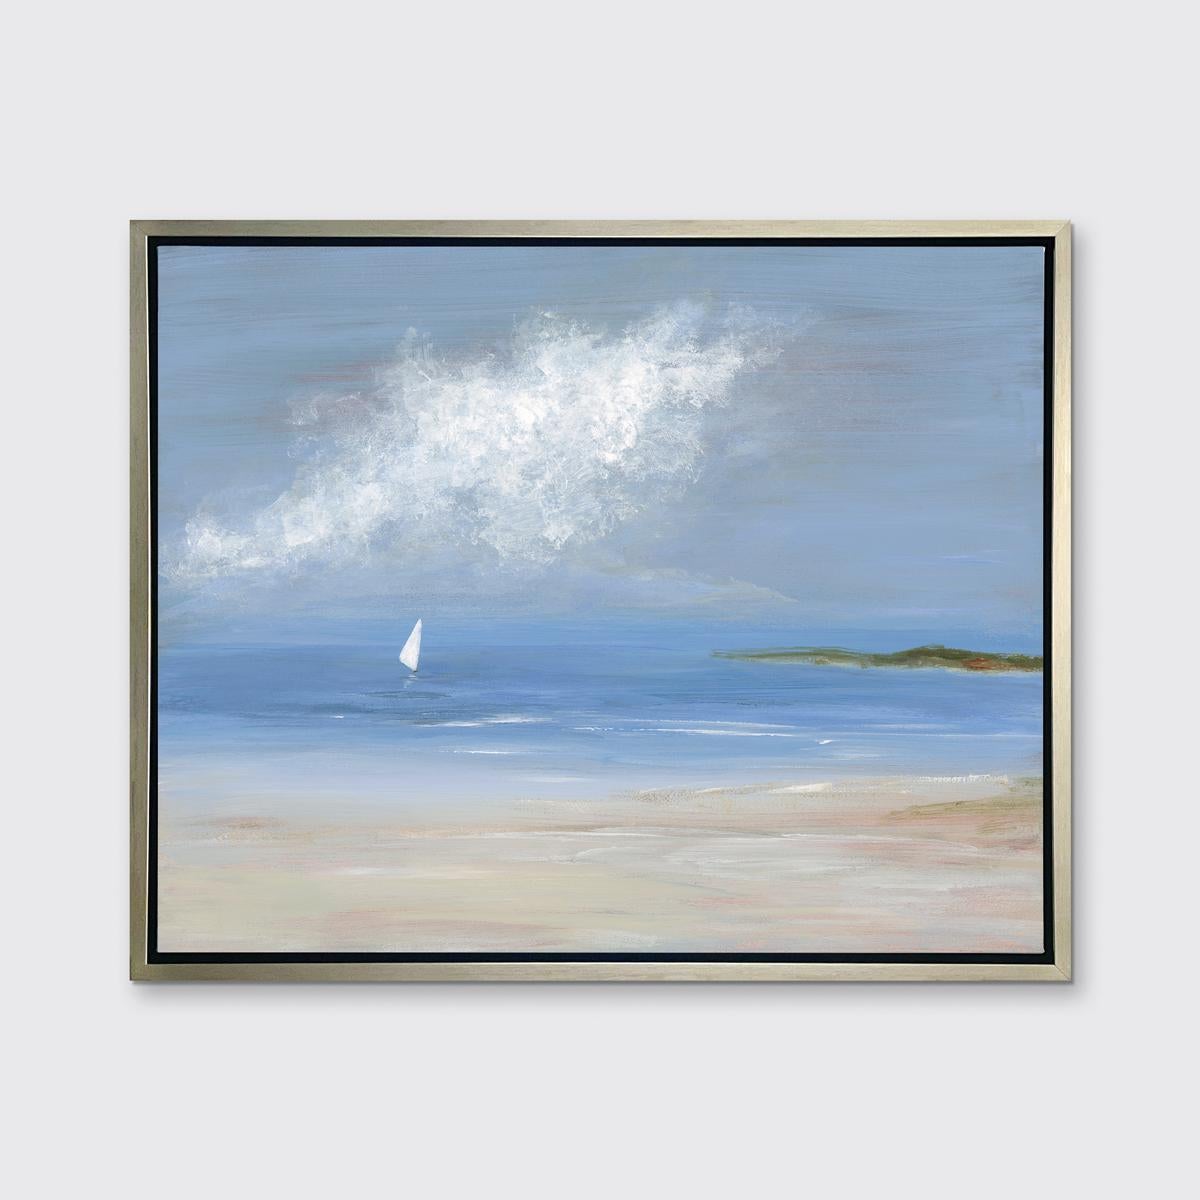 S. Cora Aldo Landscape Print - "Sunday Sail, " Framed Limited Edition Giclee Print, 24" x 30"